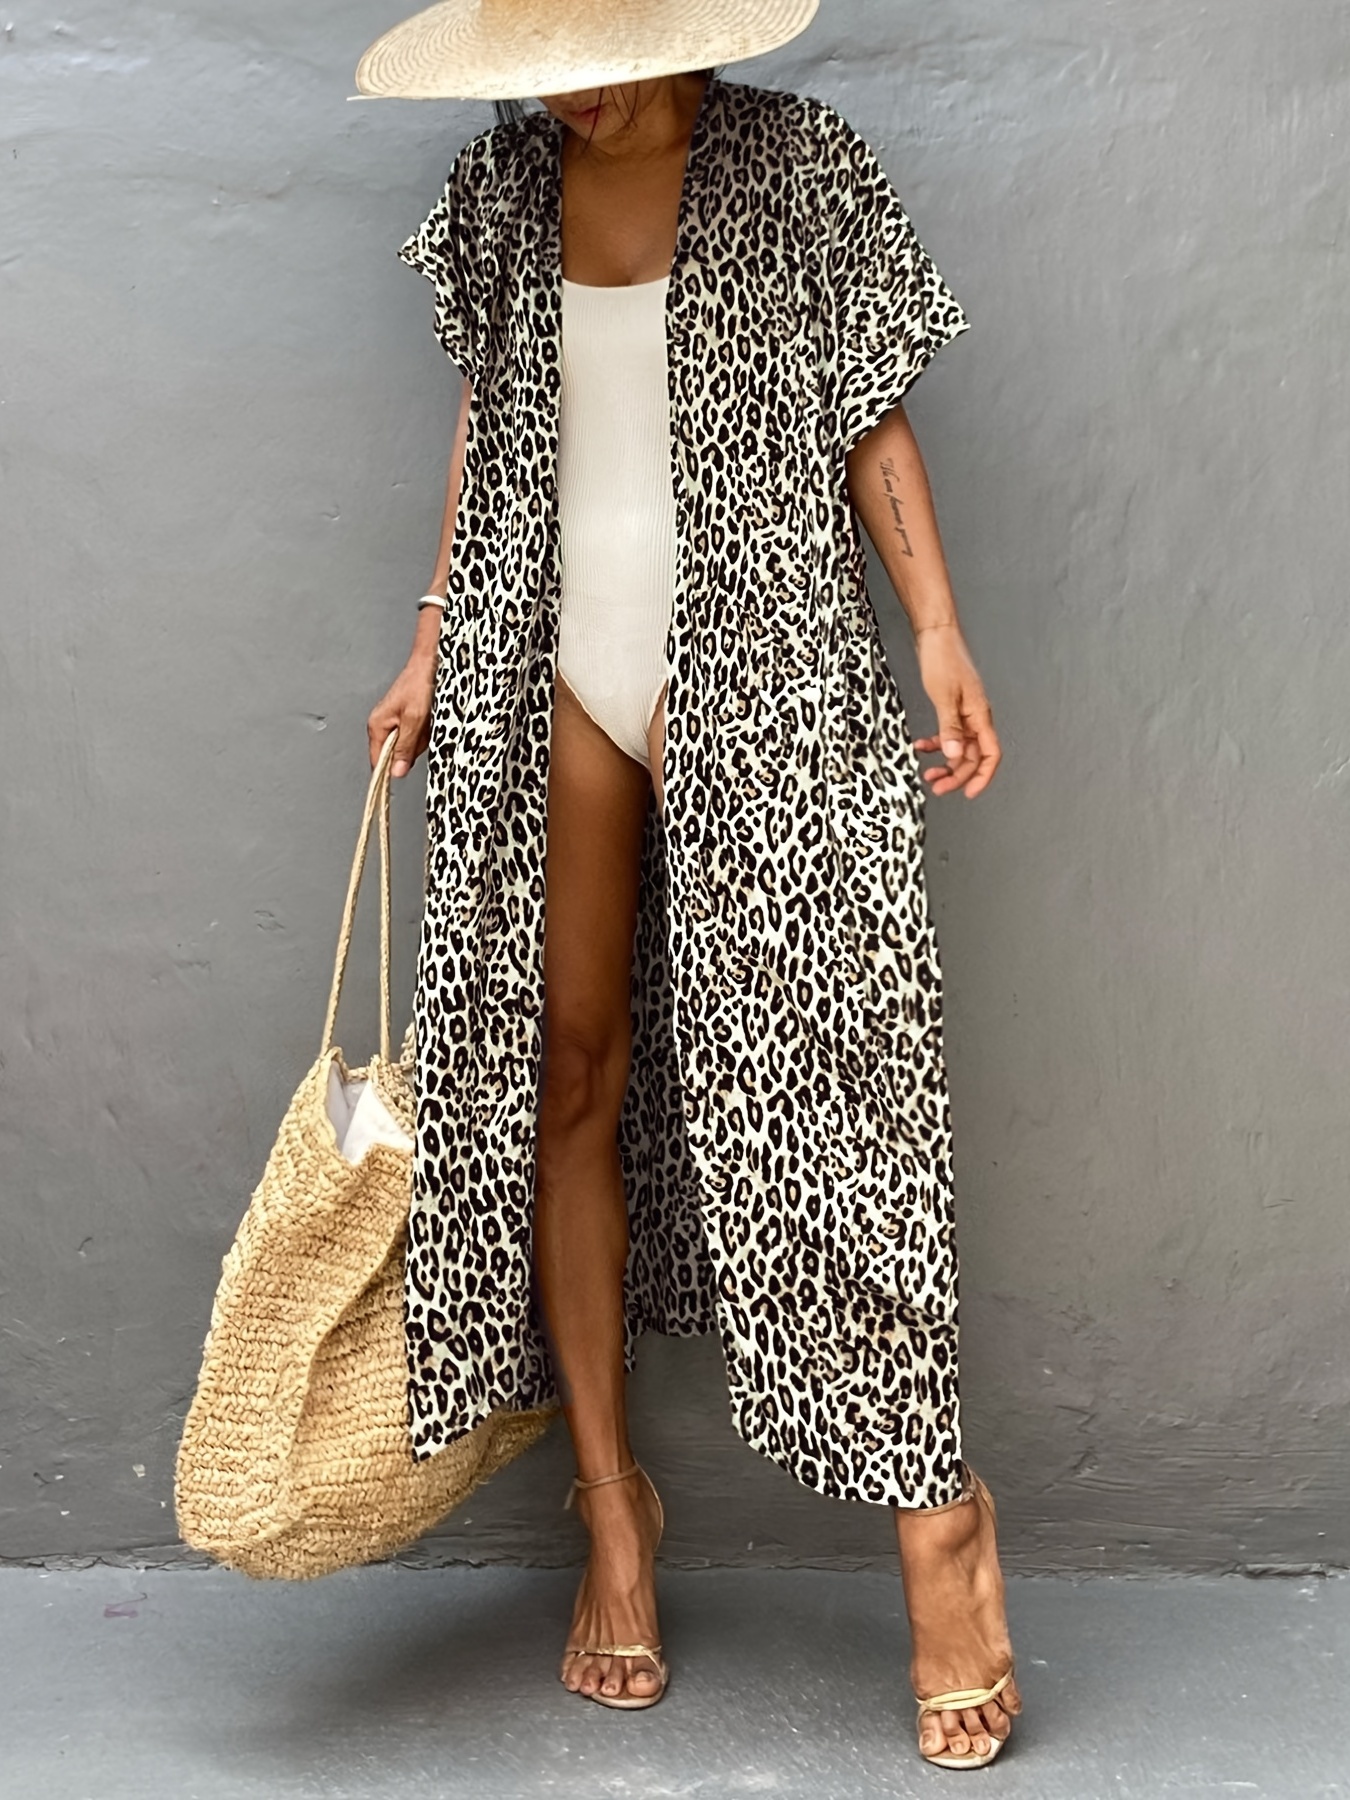 Leopard Mesh Cover Up Sleeveless Dress